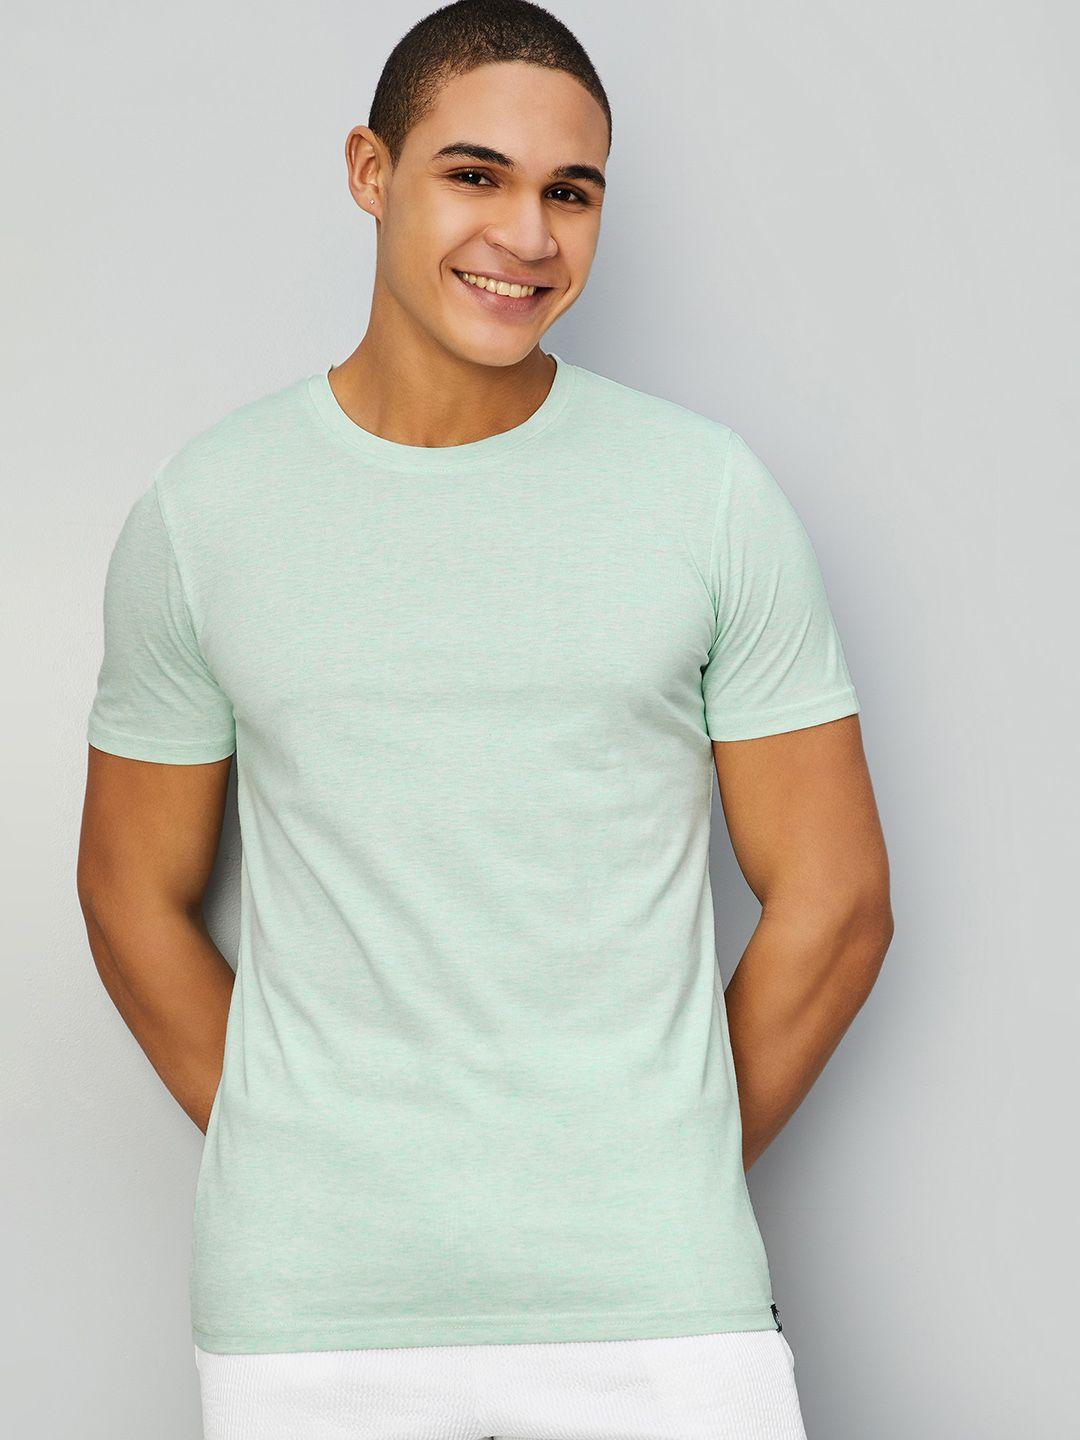 max round neck short sleeves cotton t-shirt